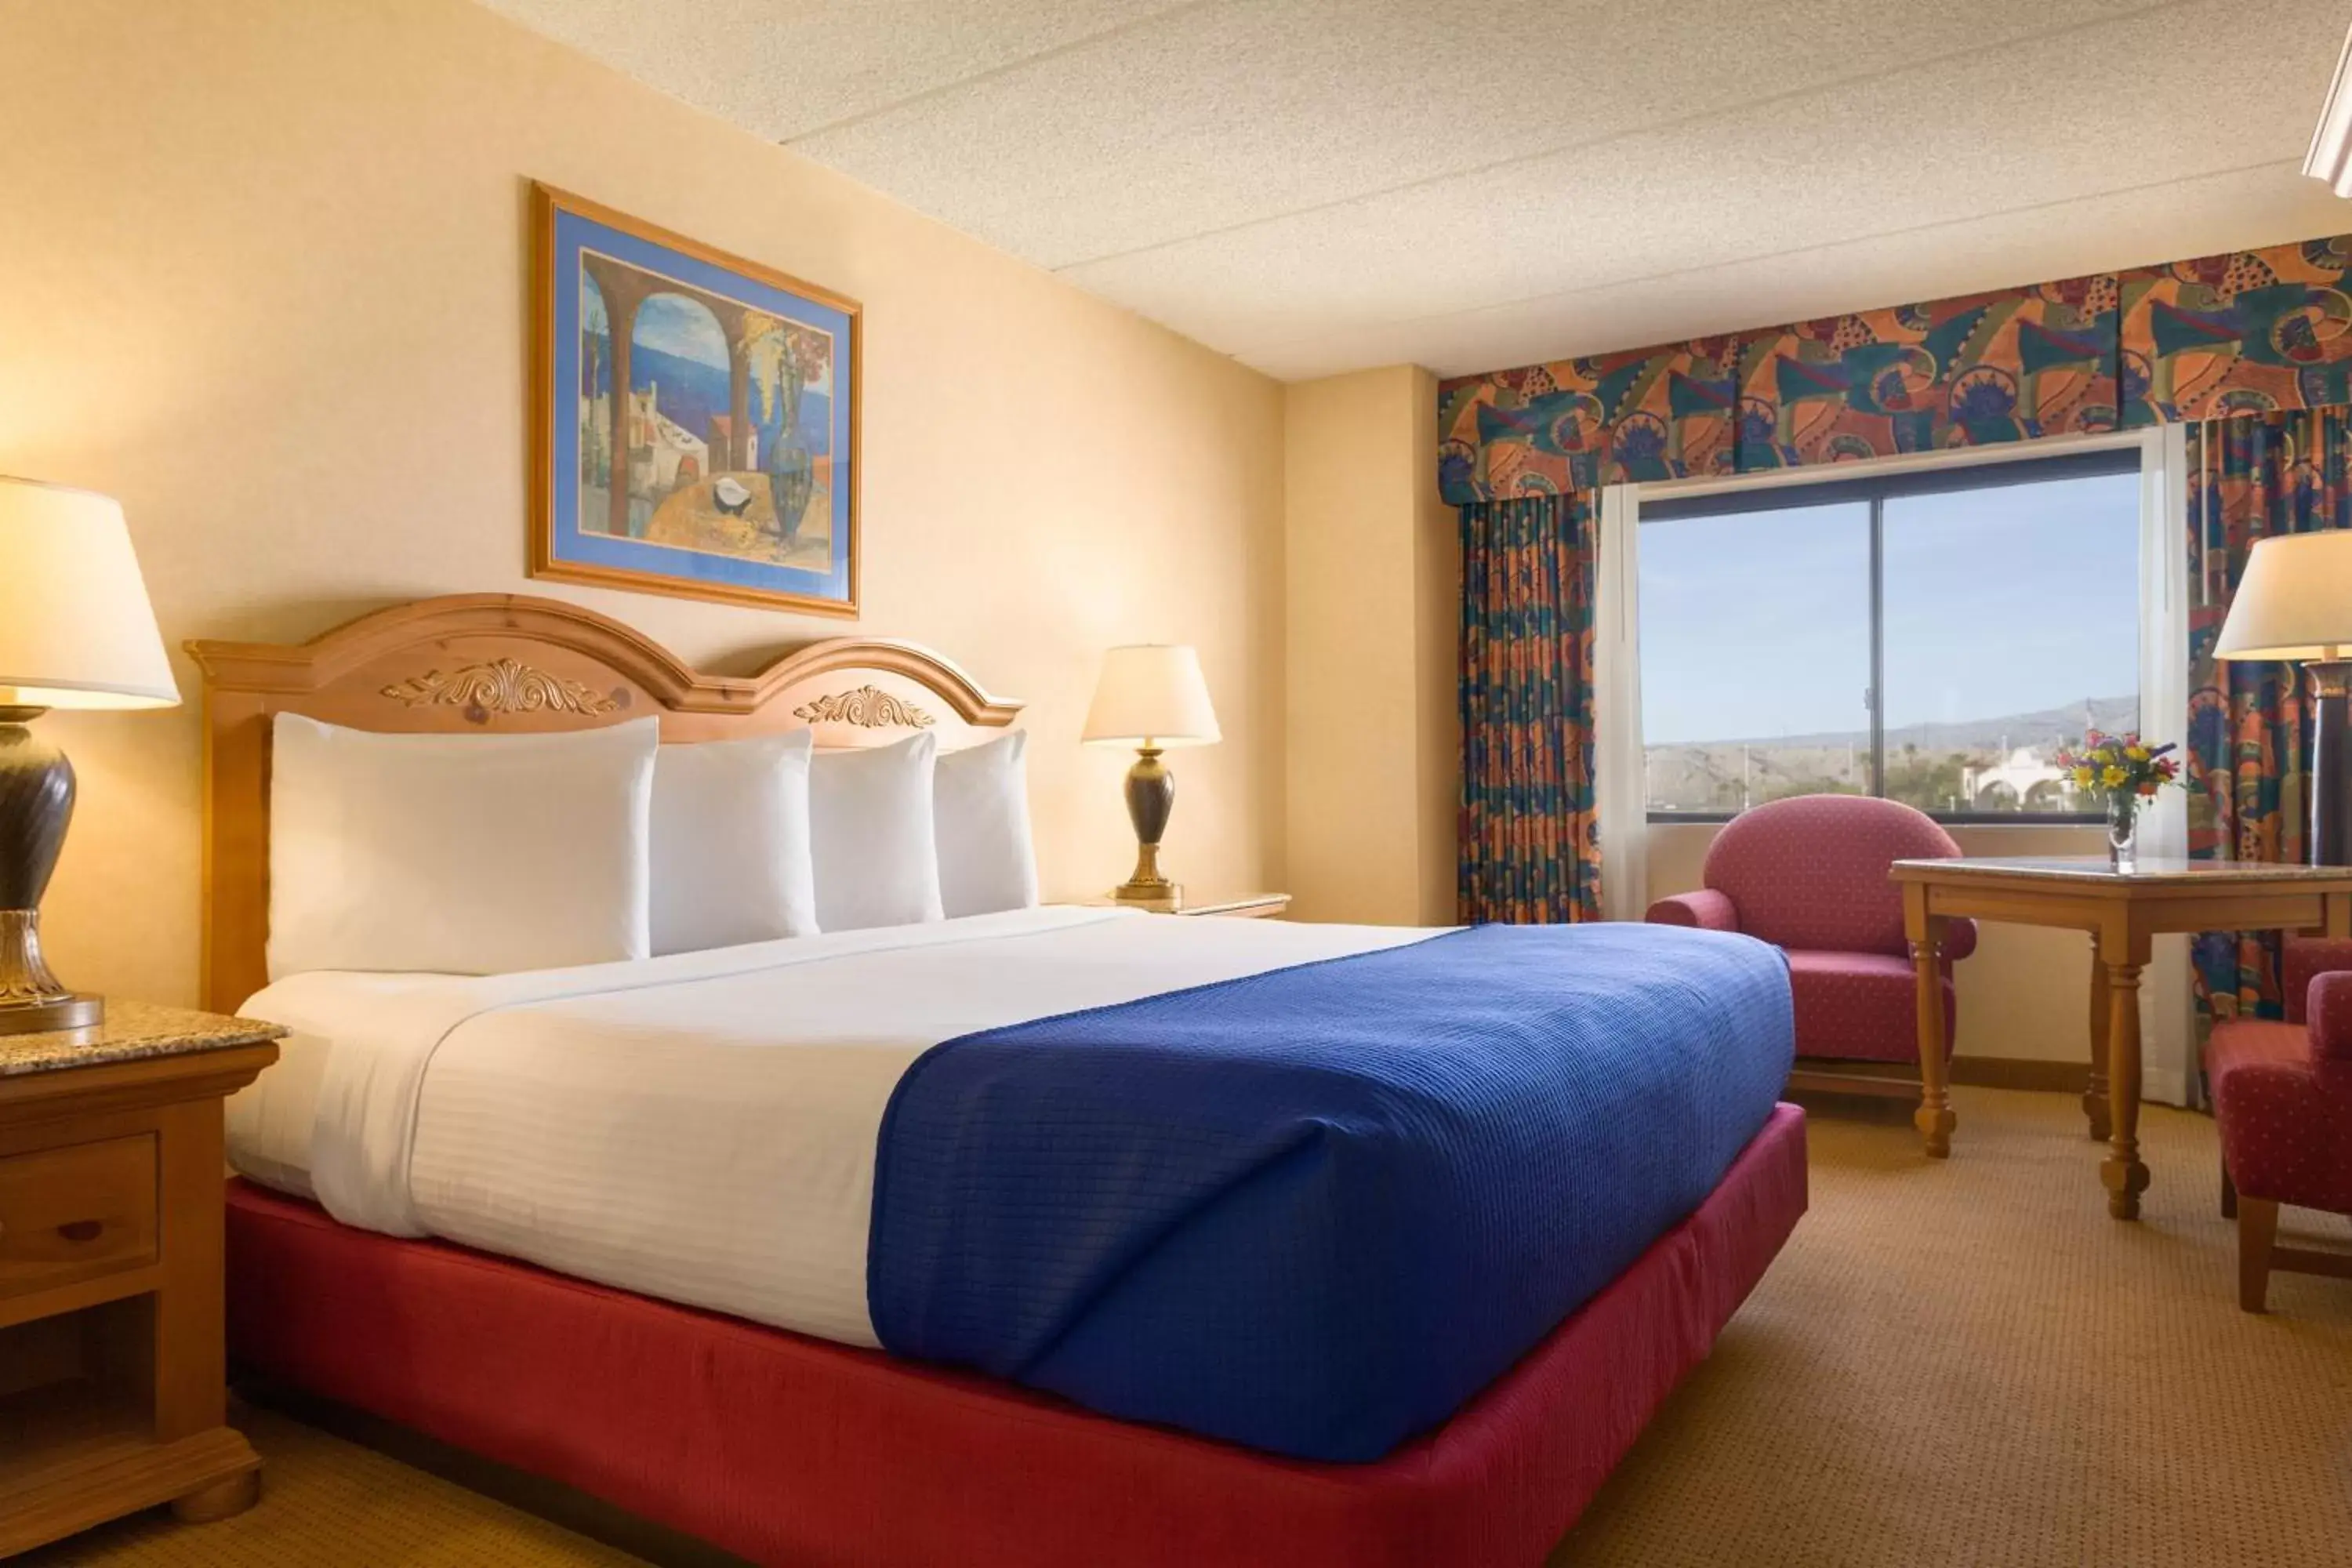 Bedroom, Room Photo in Harrah's Laughlin Beach Resort & Casino